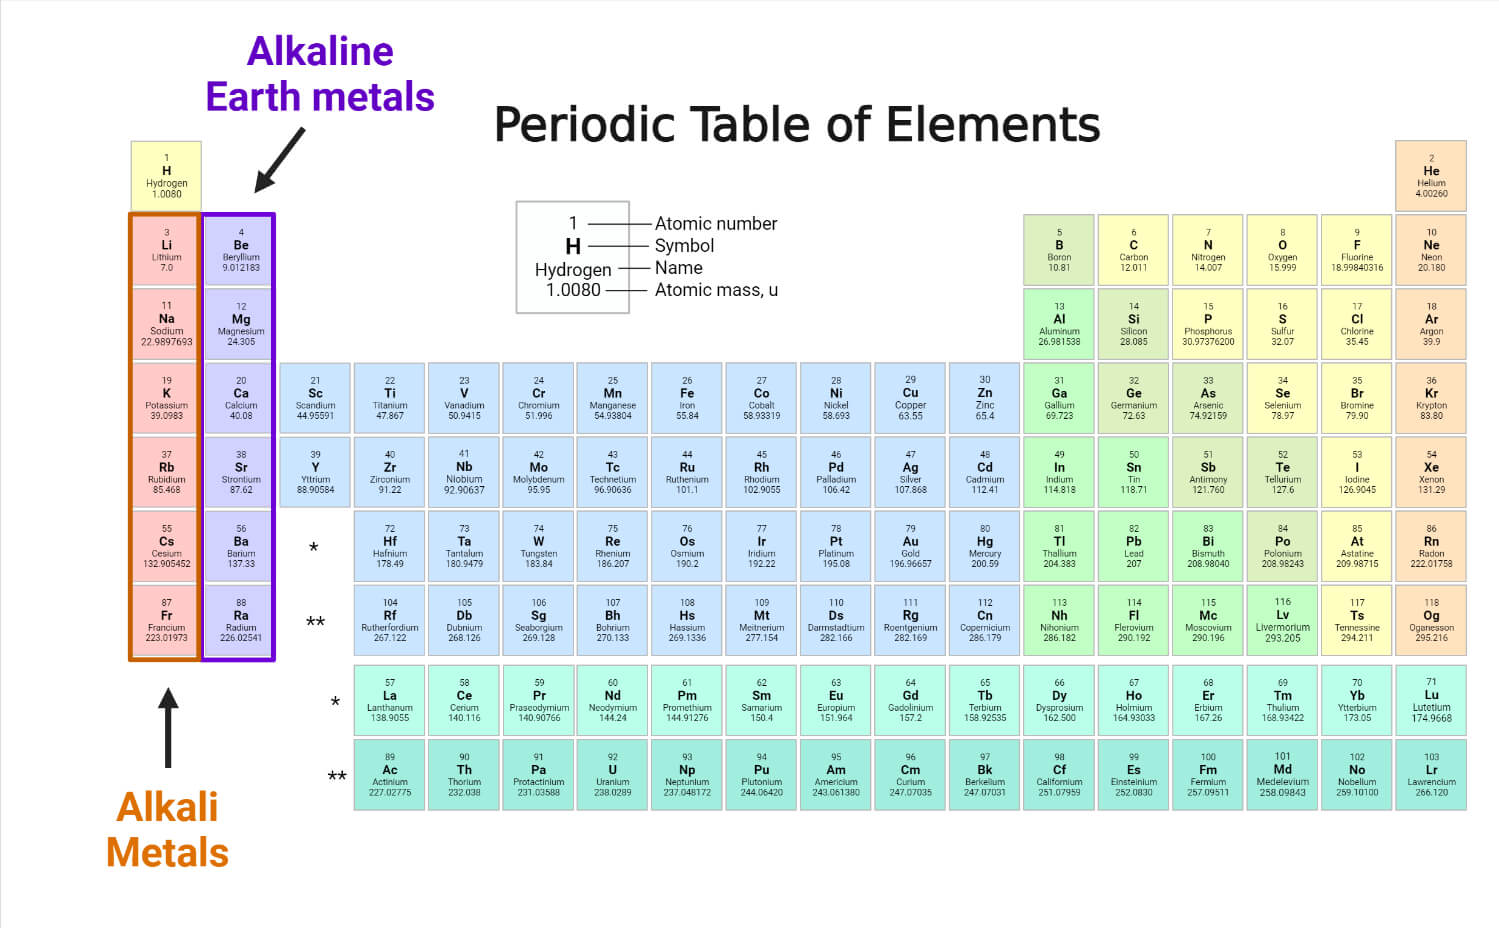 Alkali and Alkaline Earth Metals